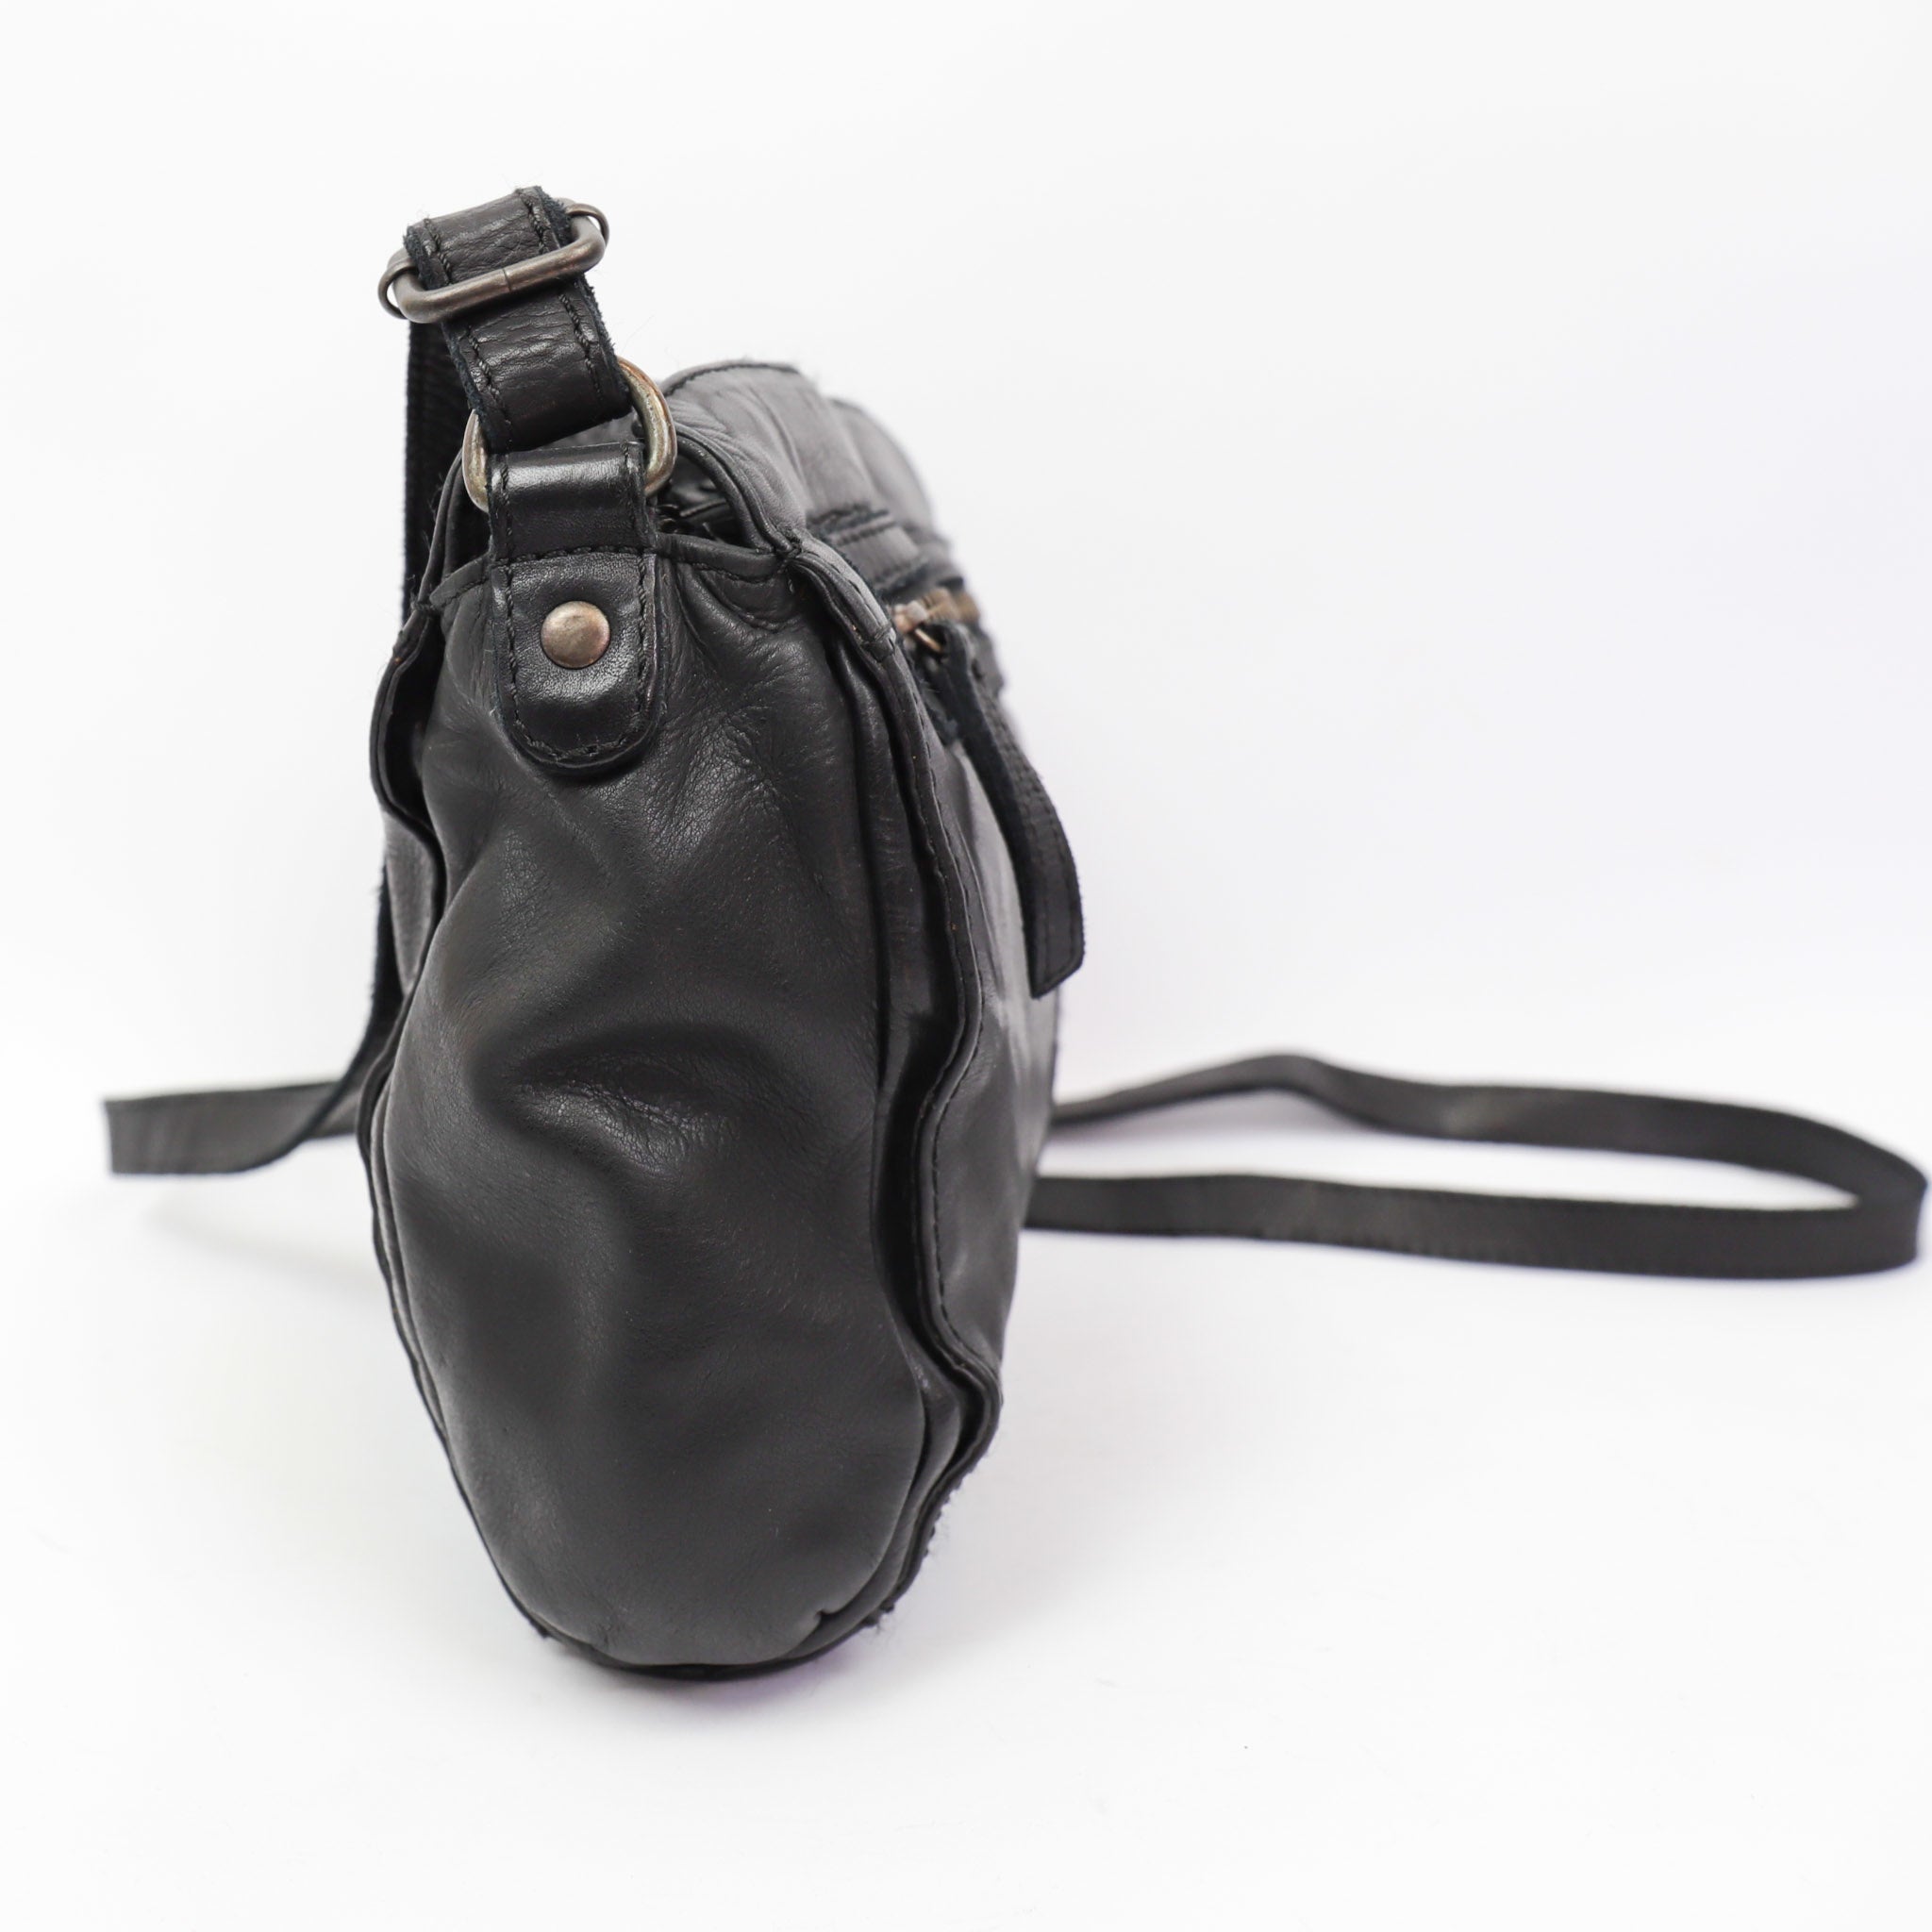 Klein schoudertasje 'Olivia' zwart - CL 35735